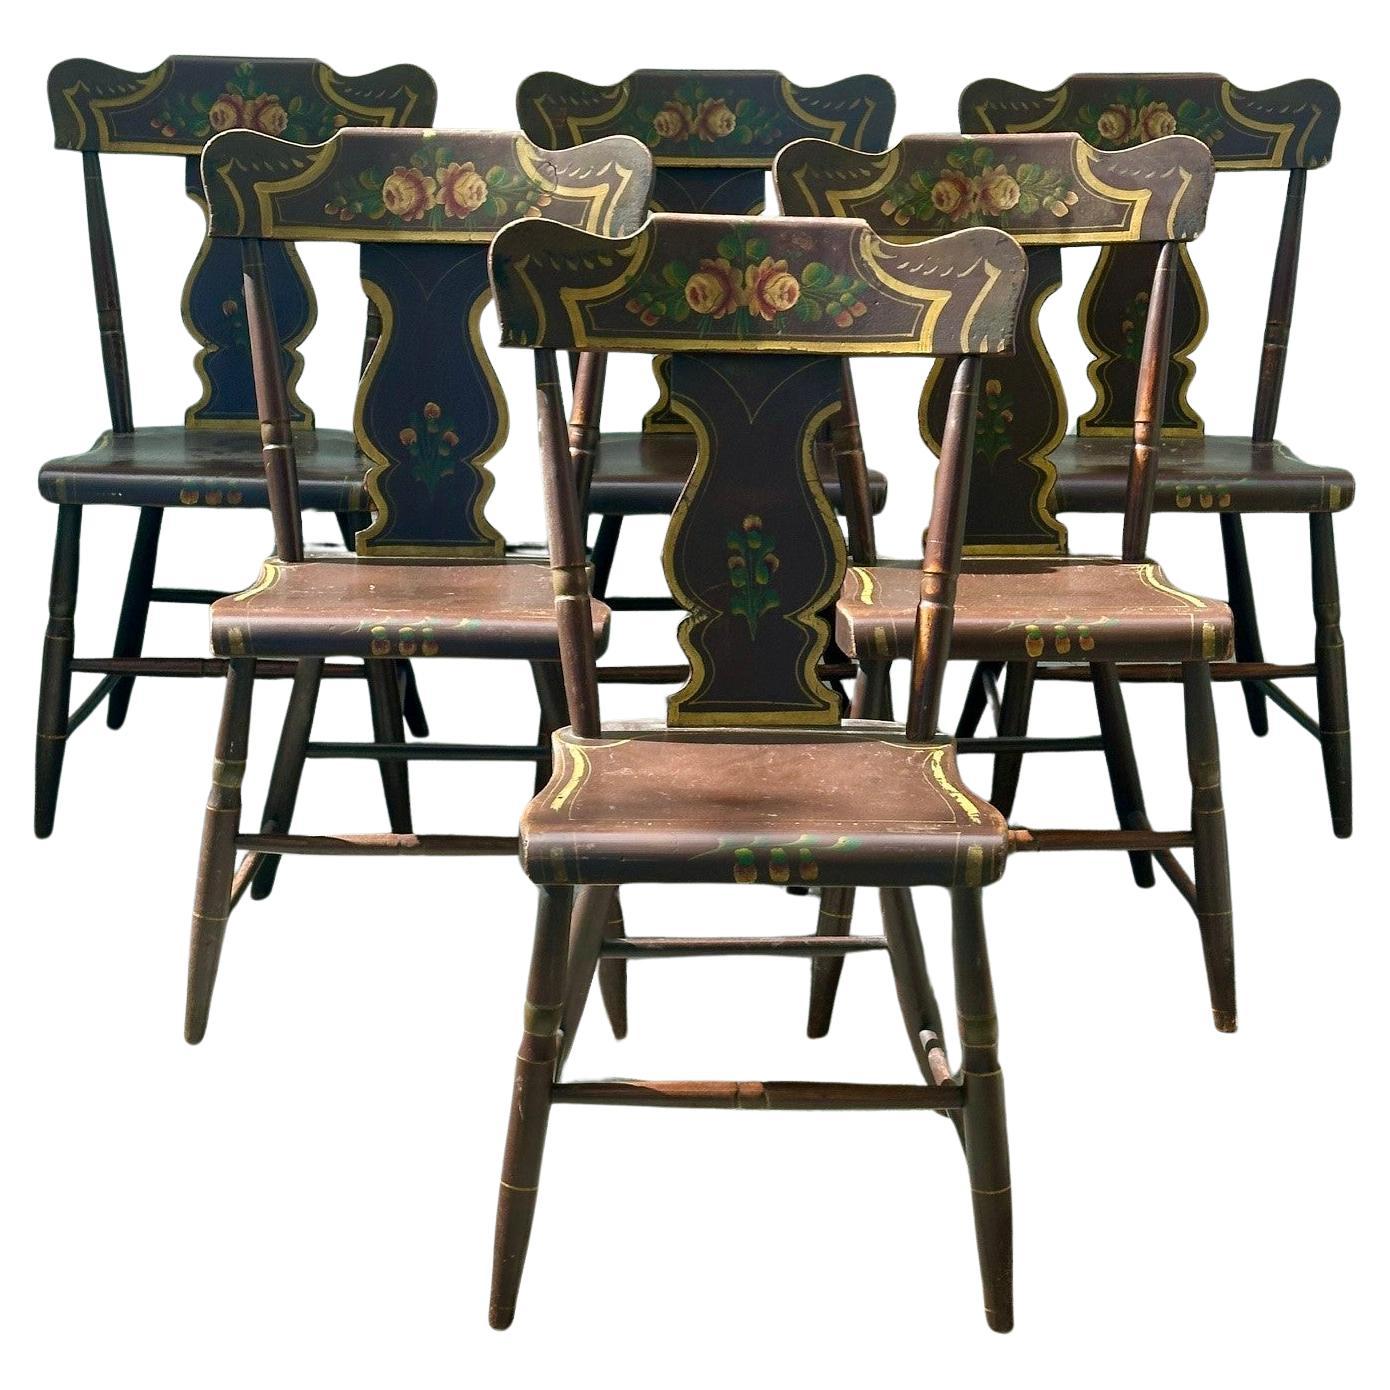 Antique Set of 6 Original Painted Pennsylvania Plank Bottom Chairs.